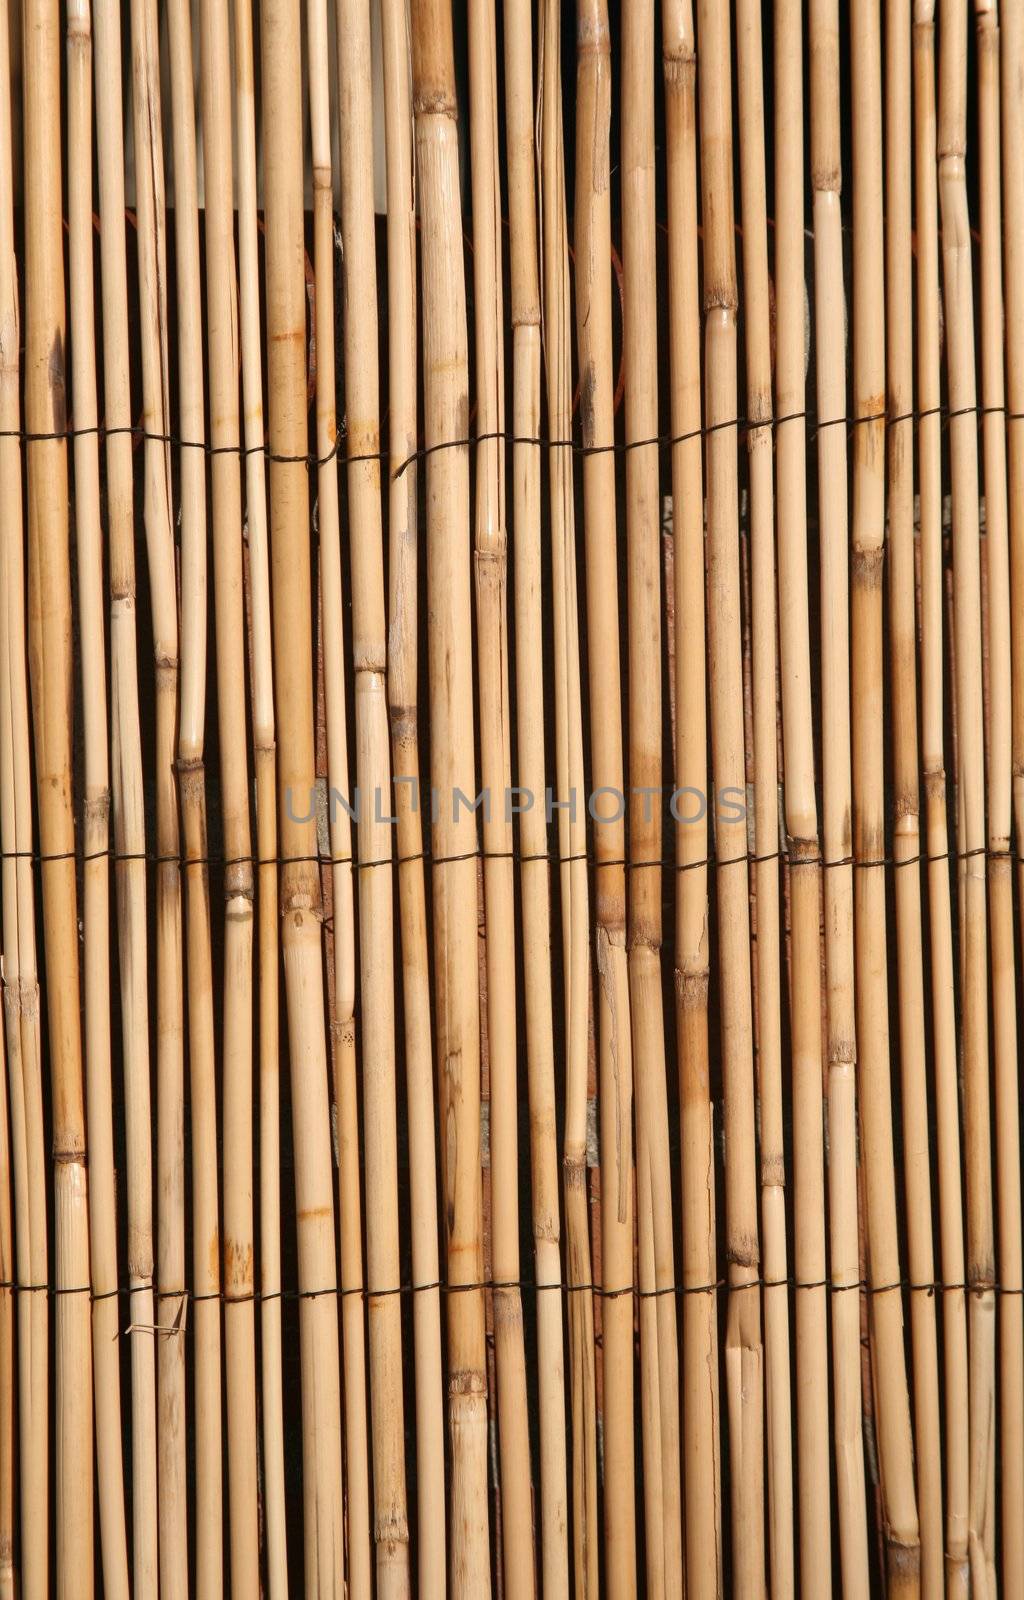 Rush or bamboo texture, digital image